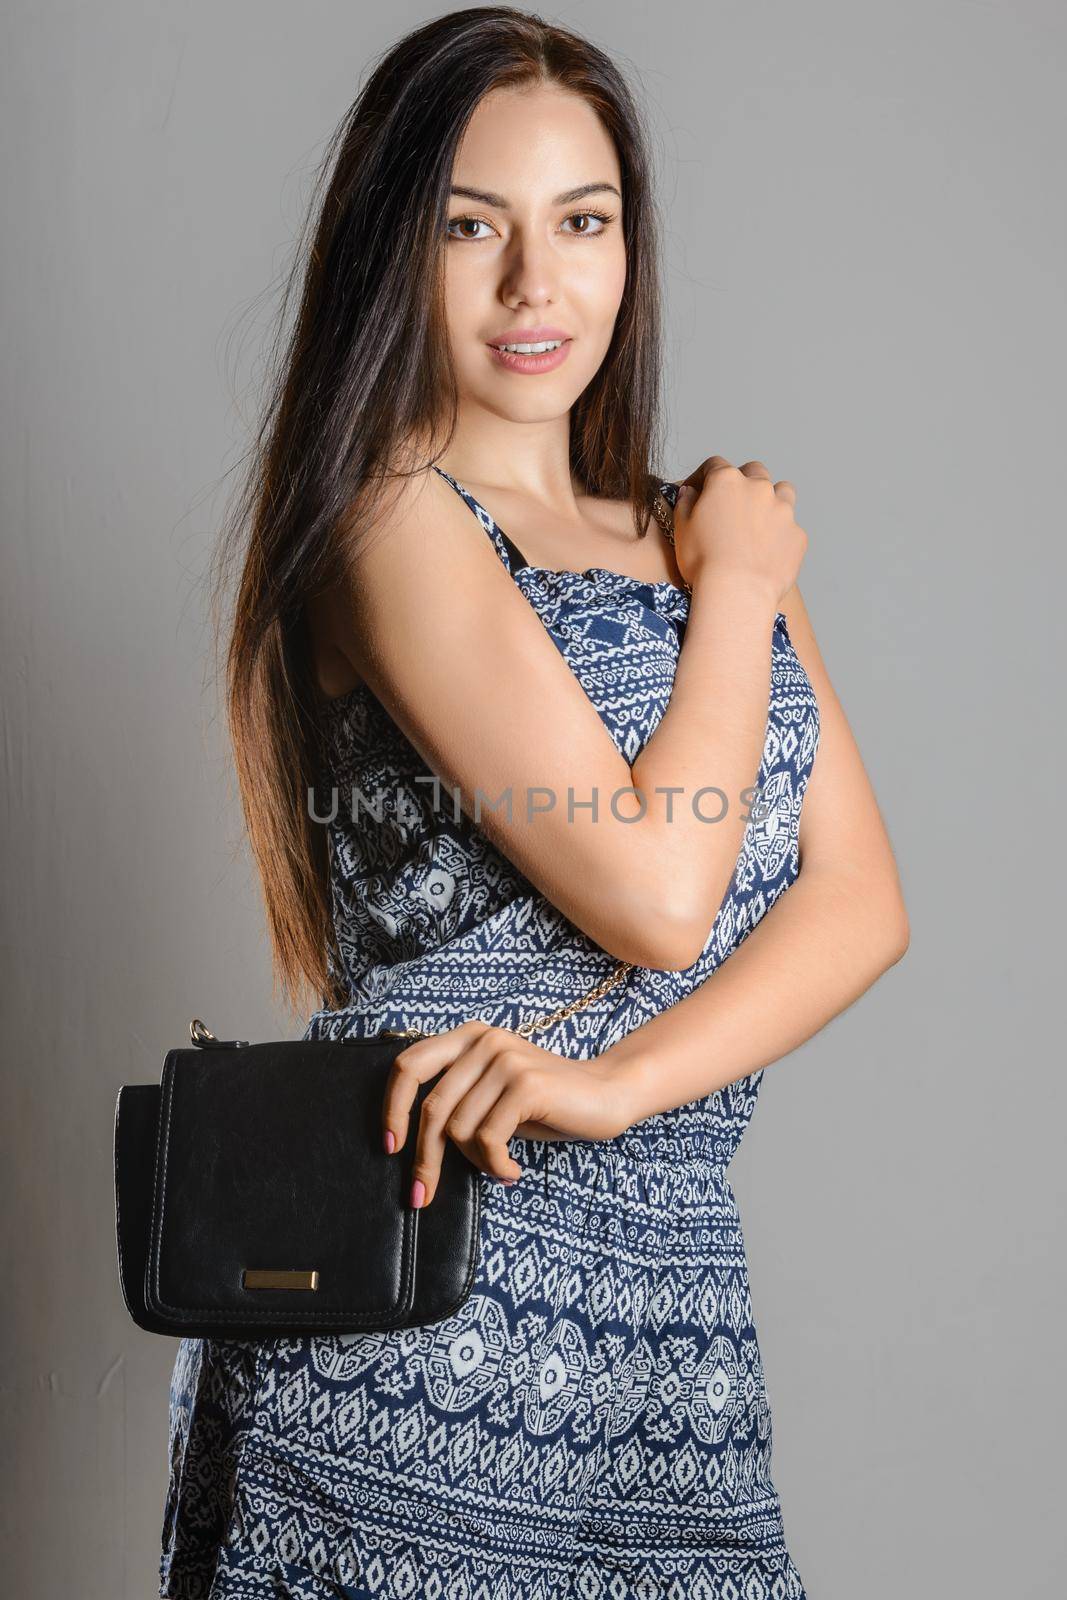 Cute brunette girl with long flowing hair holding black handbag by zartarn